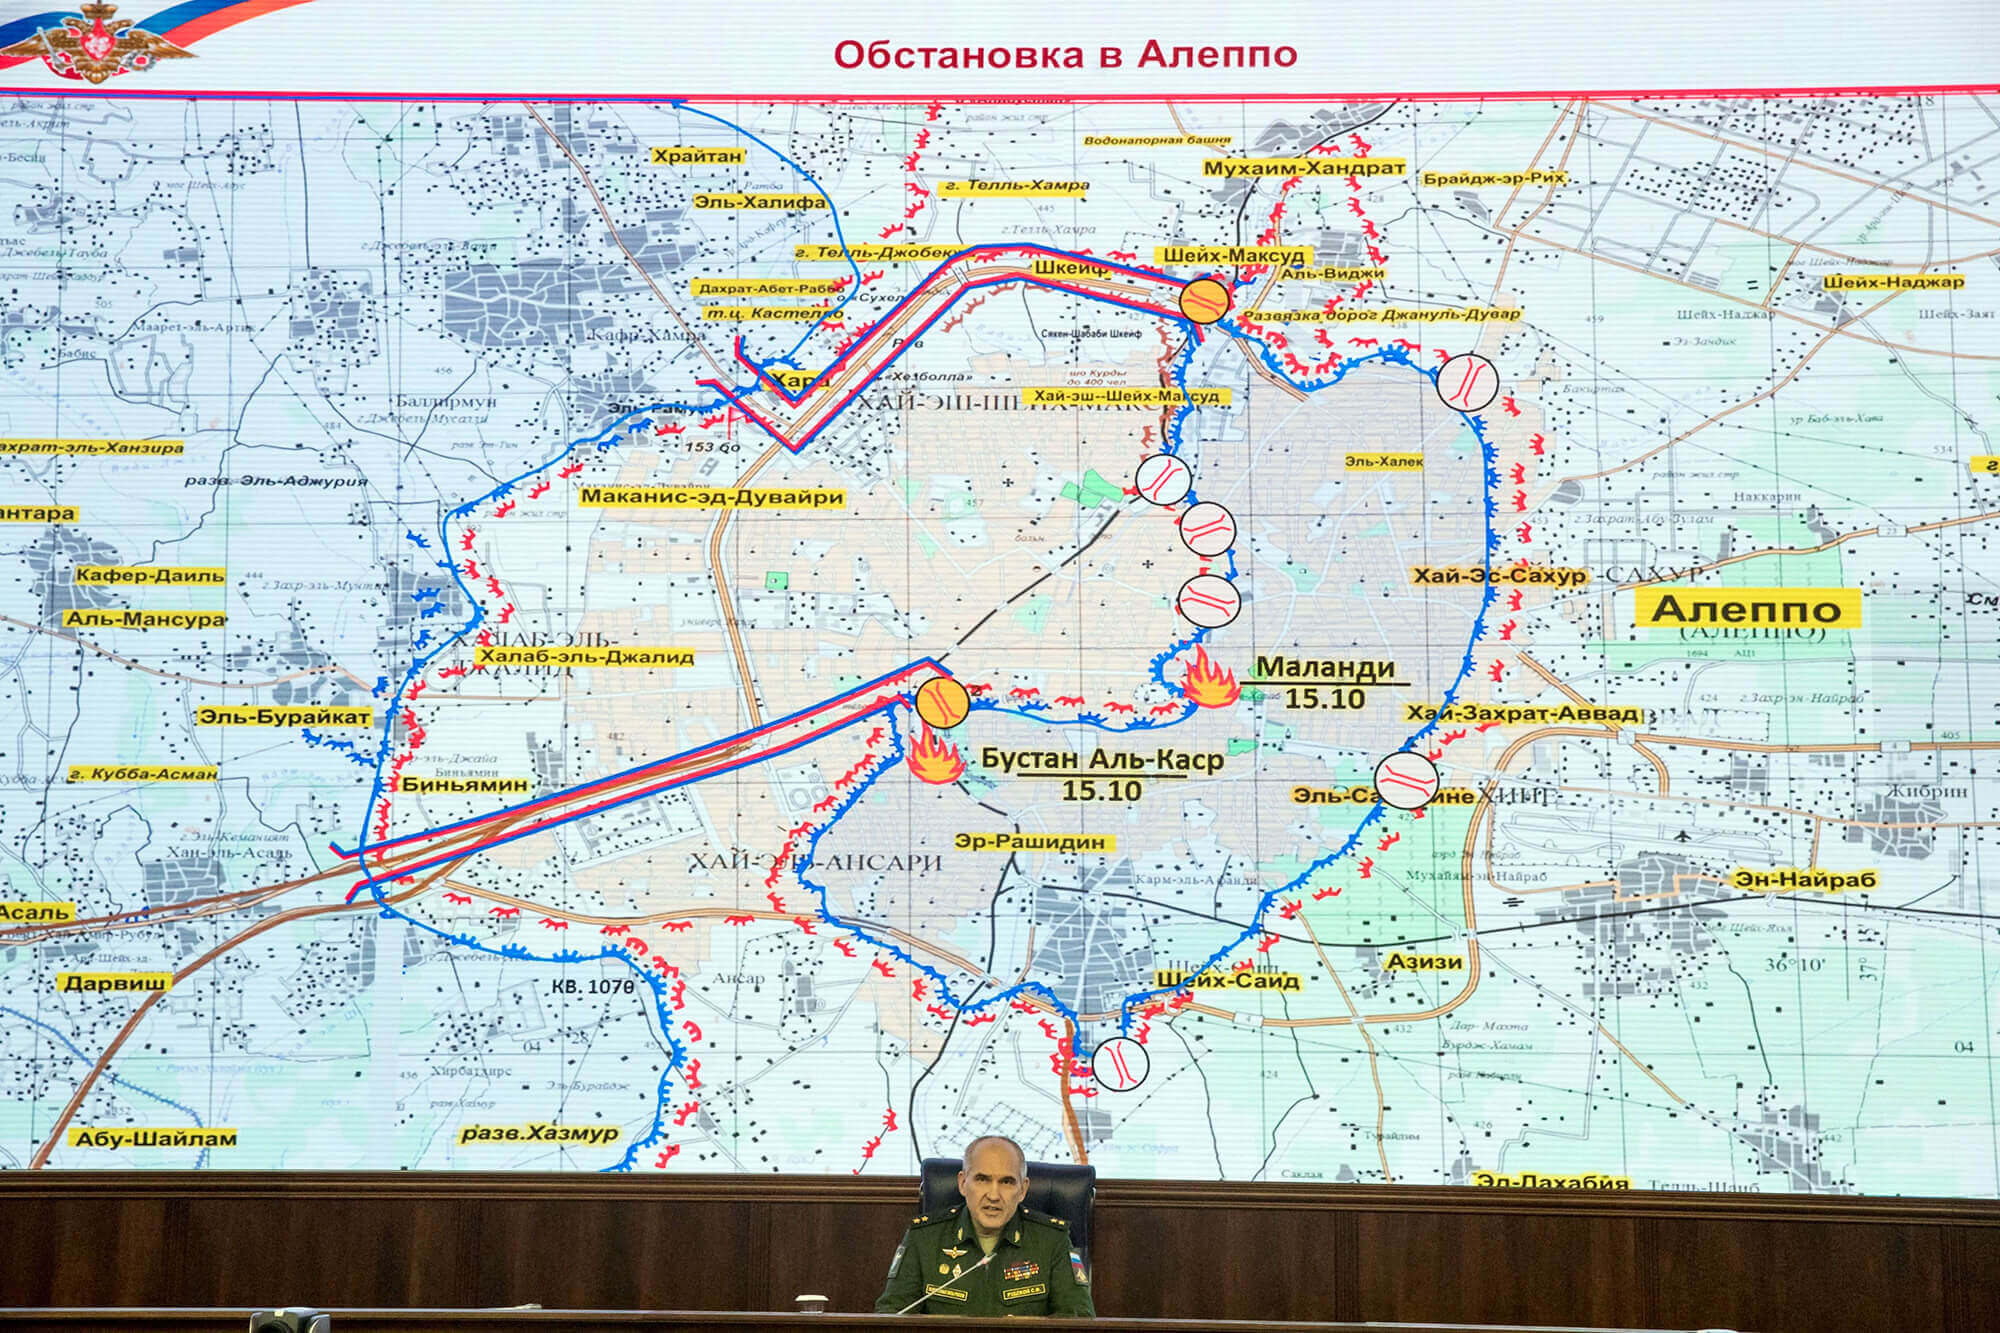 Russian Lt. Gen. Sergei Rudskoi of the announces pause in fighting in Aleppo